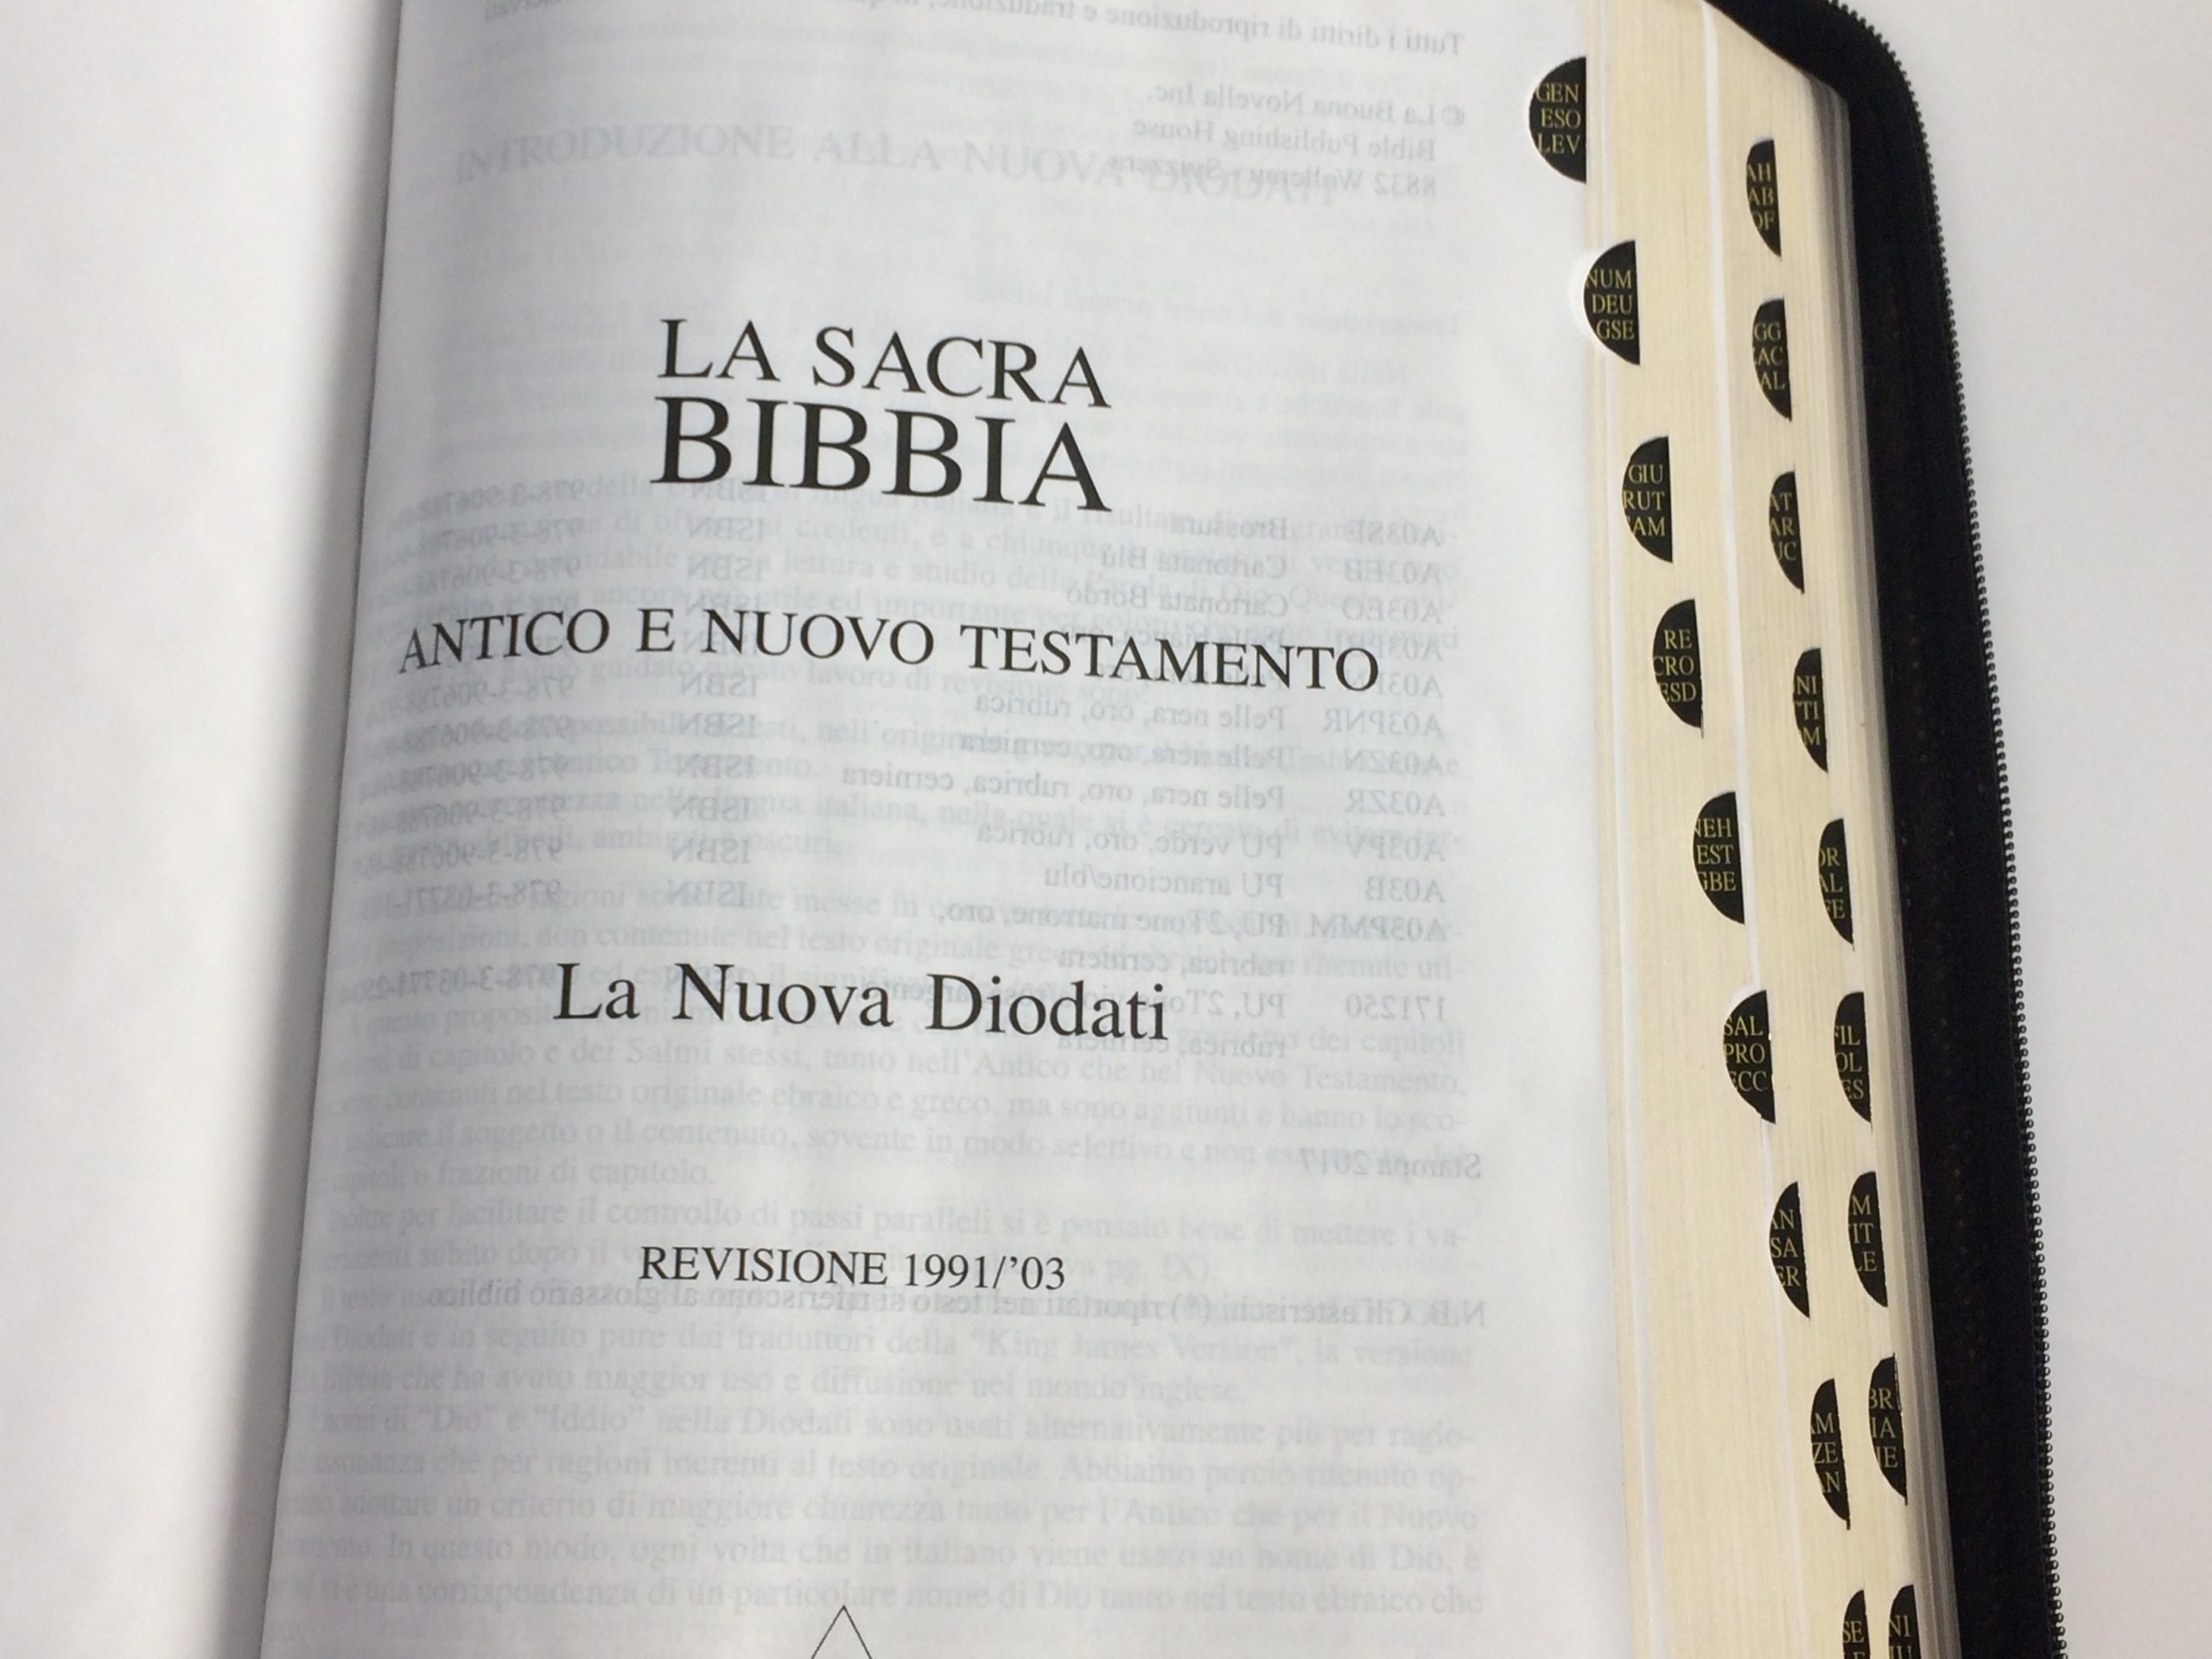 Bibbia Nuova Diodati a caratteri grandi (171.242): Nera, taglio